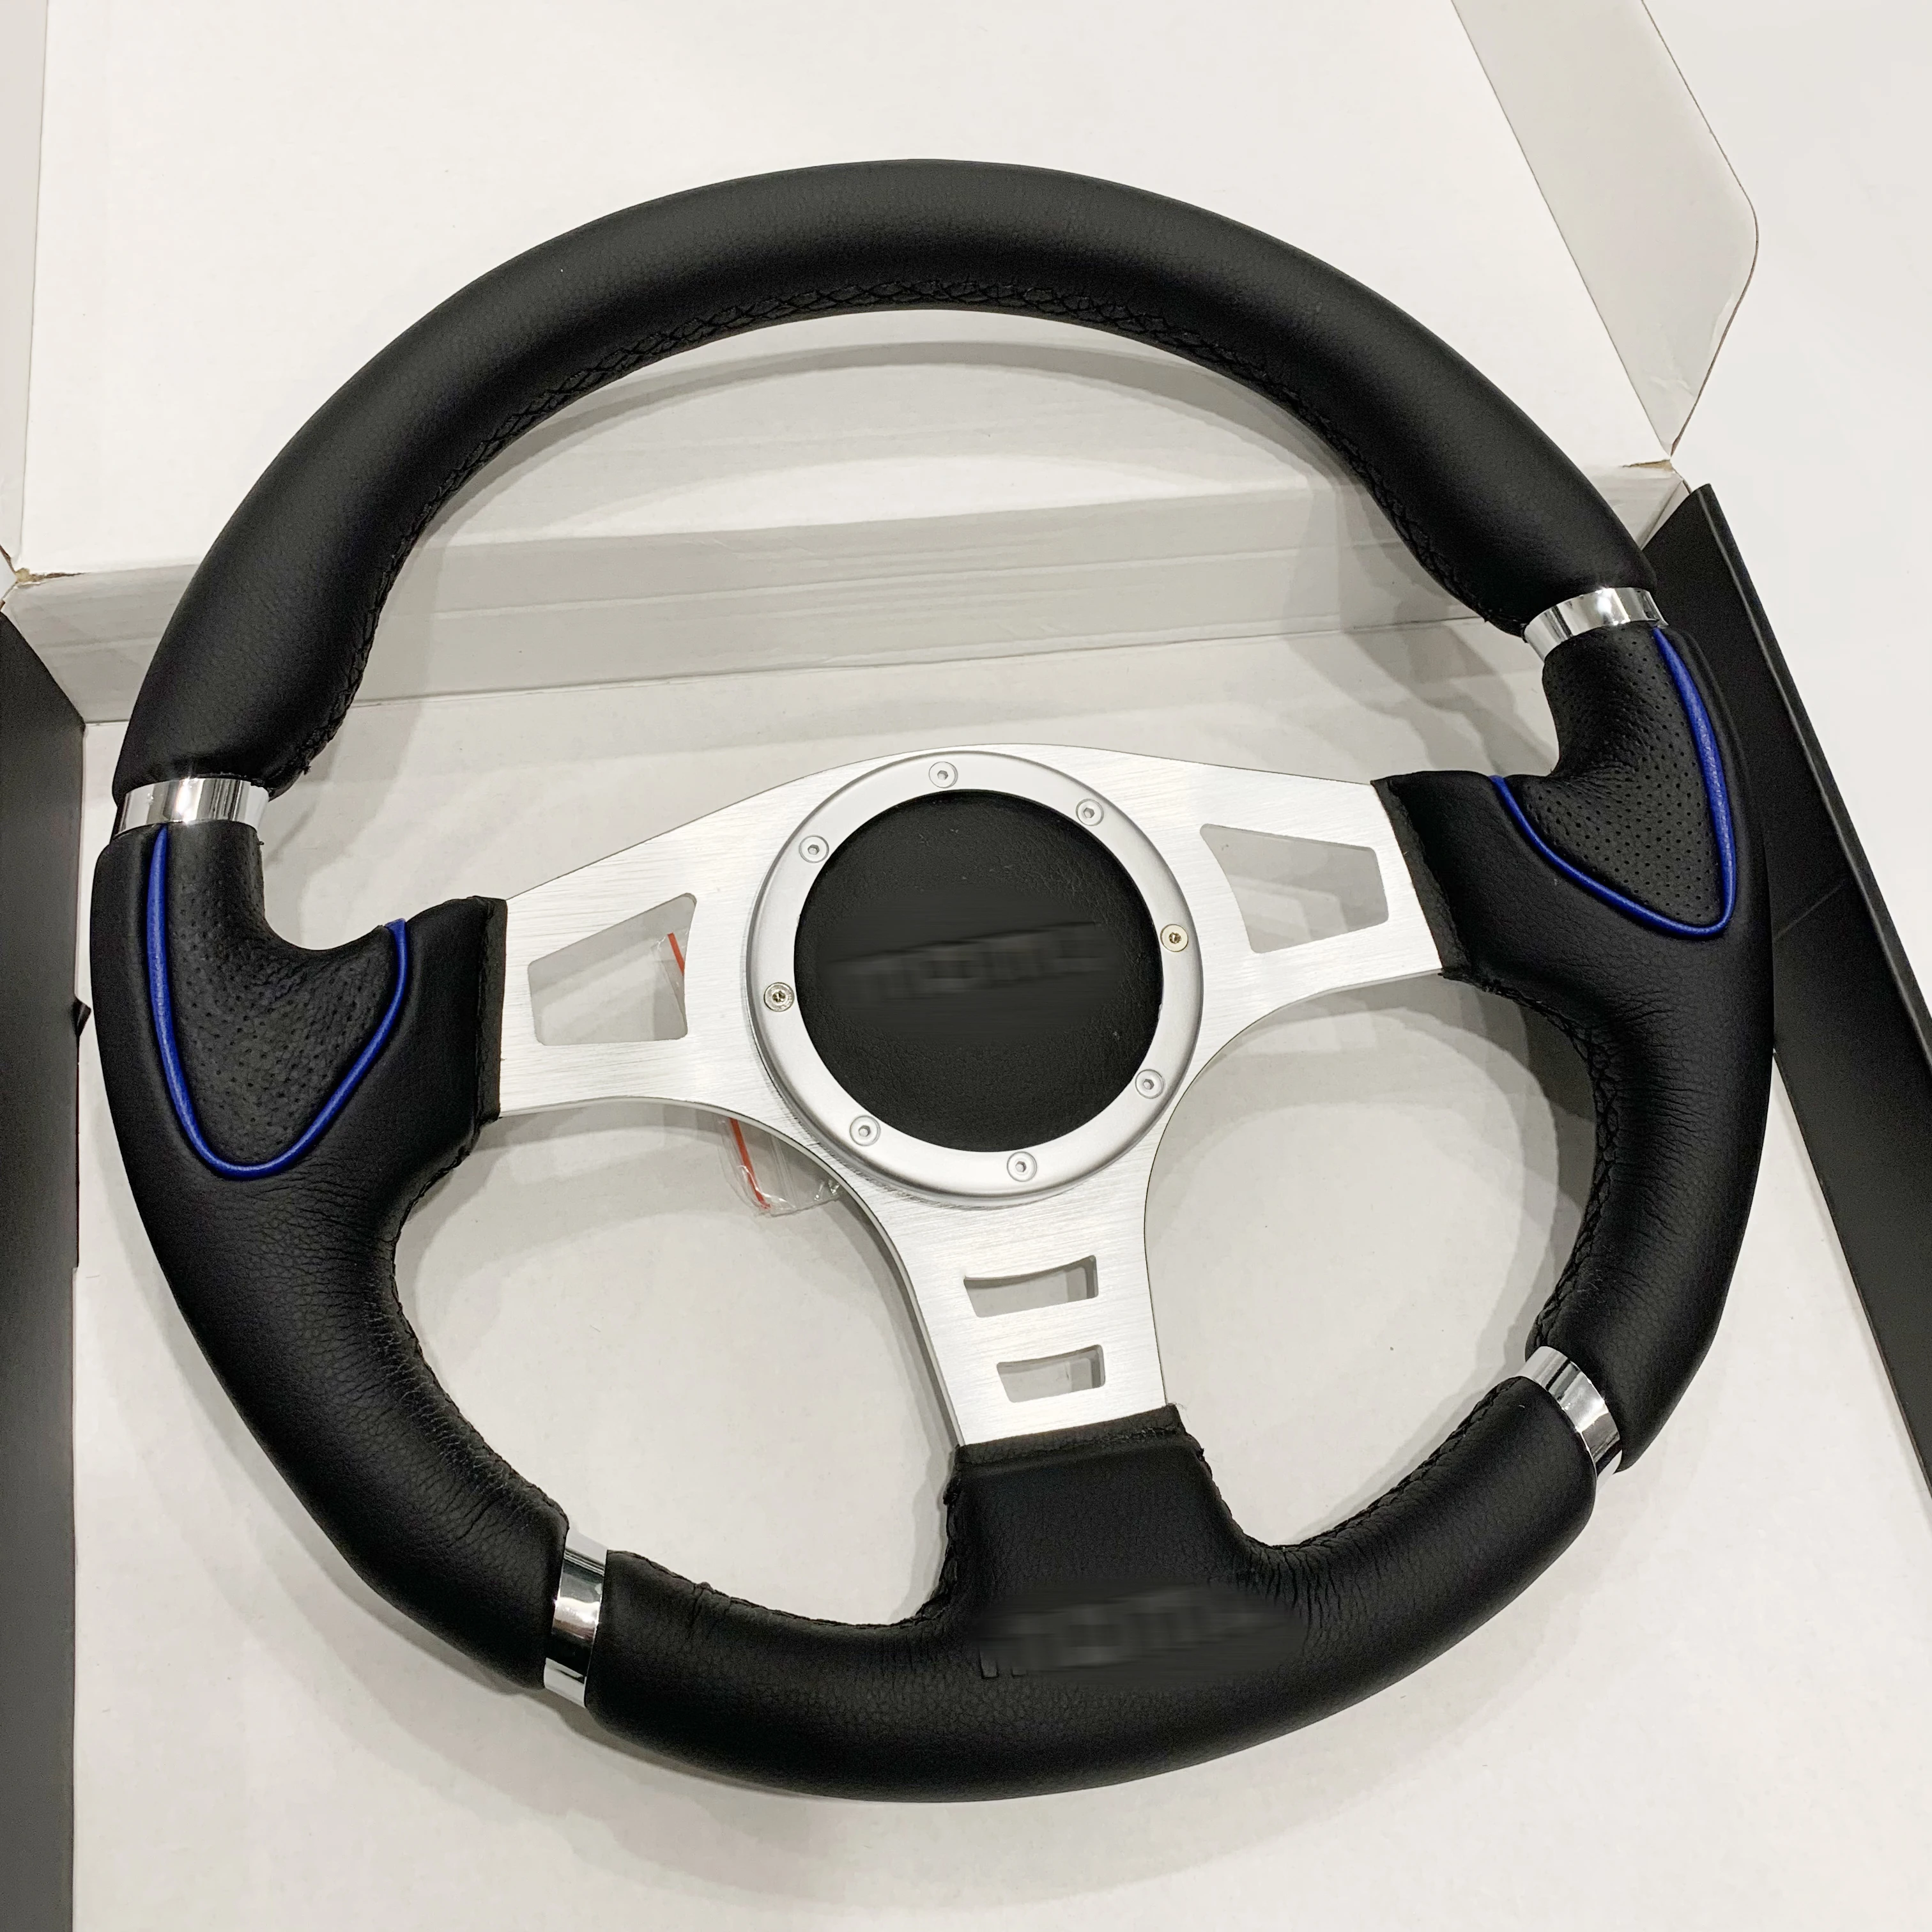 

JDM LEATHER MOMO Sports steering wheel pc simulator Global limit wheel High performance car acesssories For Toyota Honda BMW